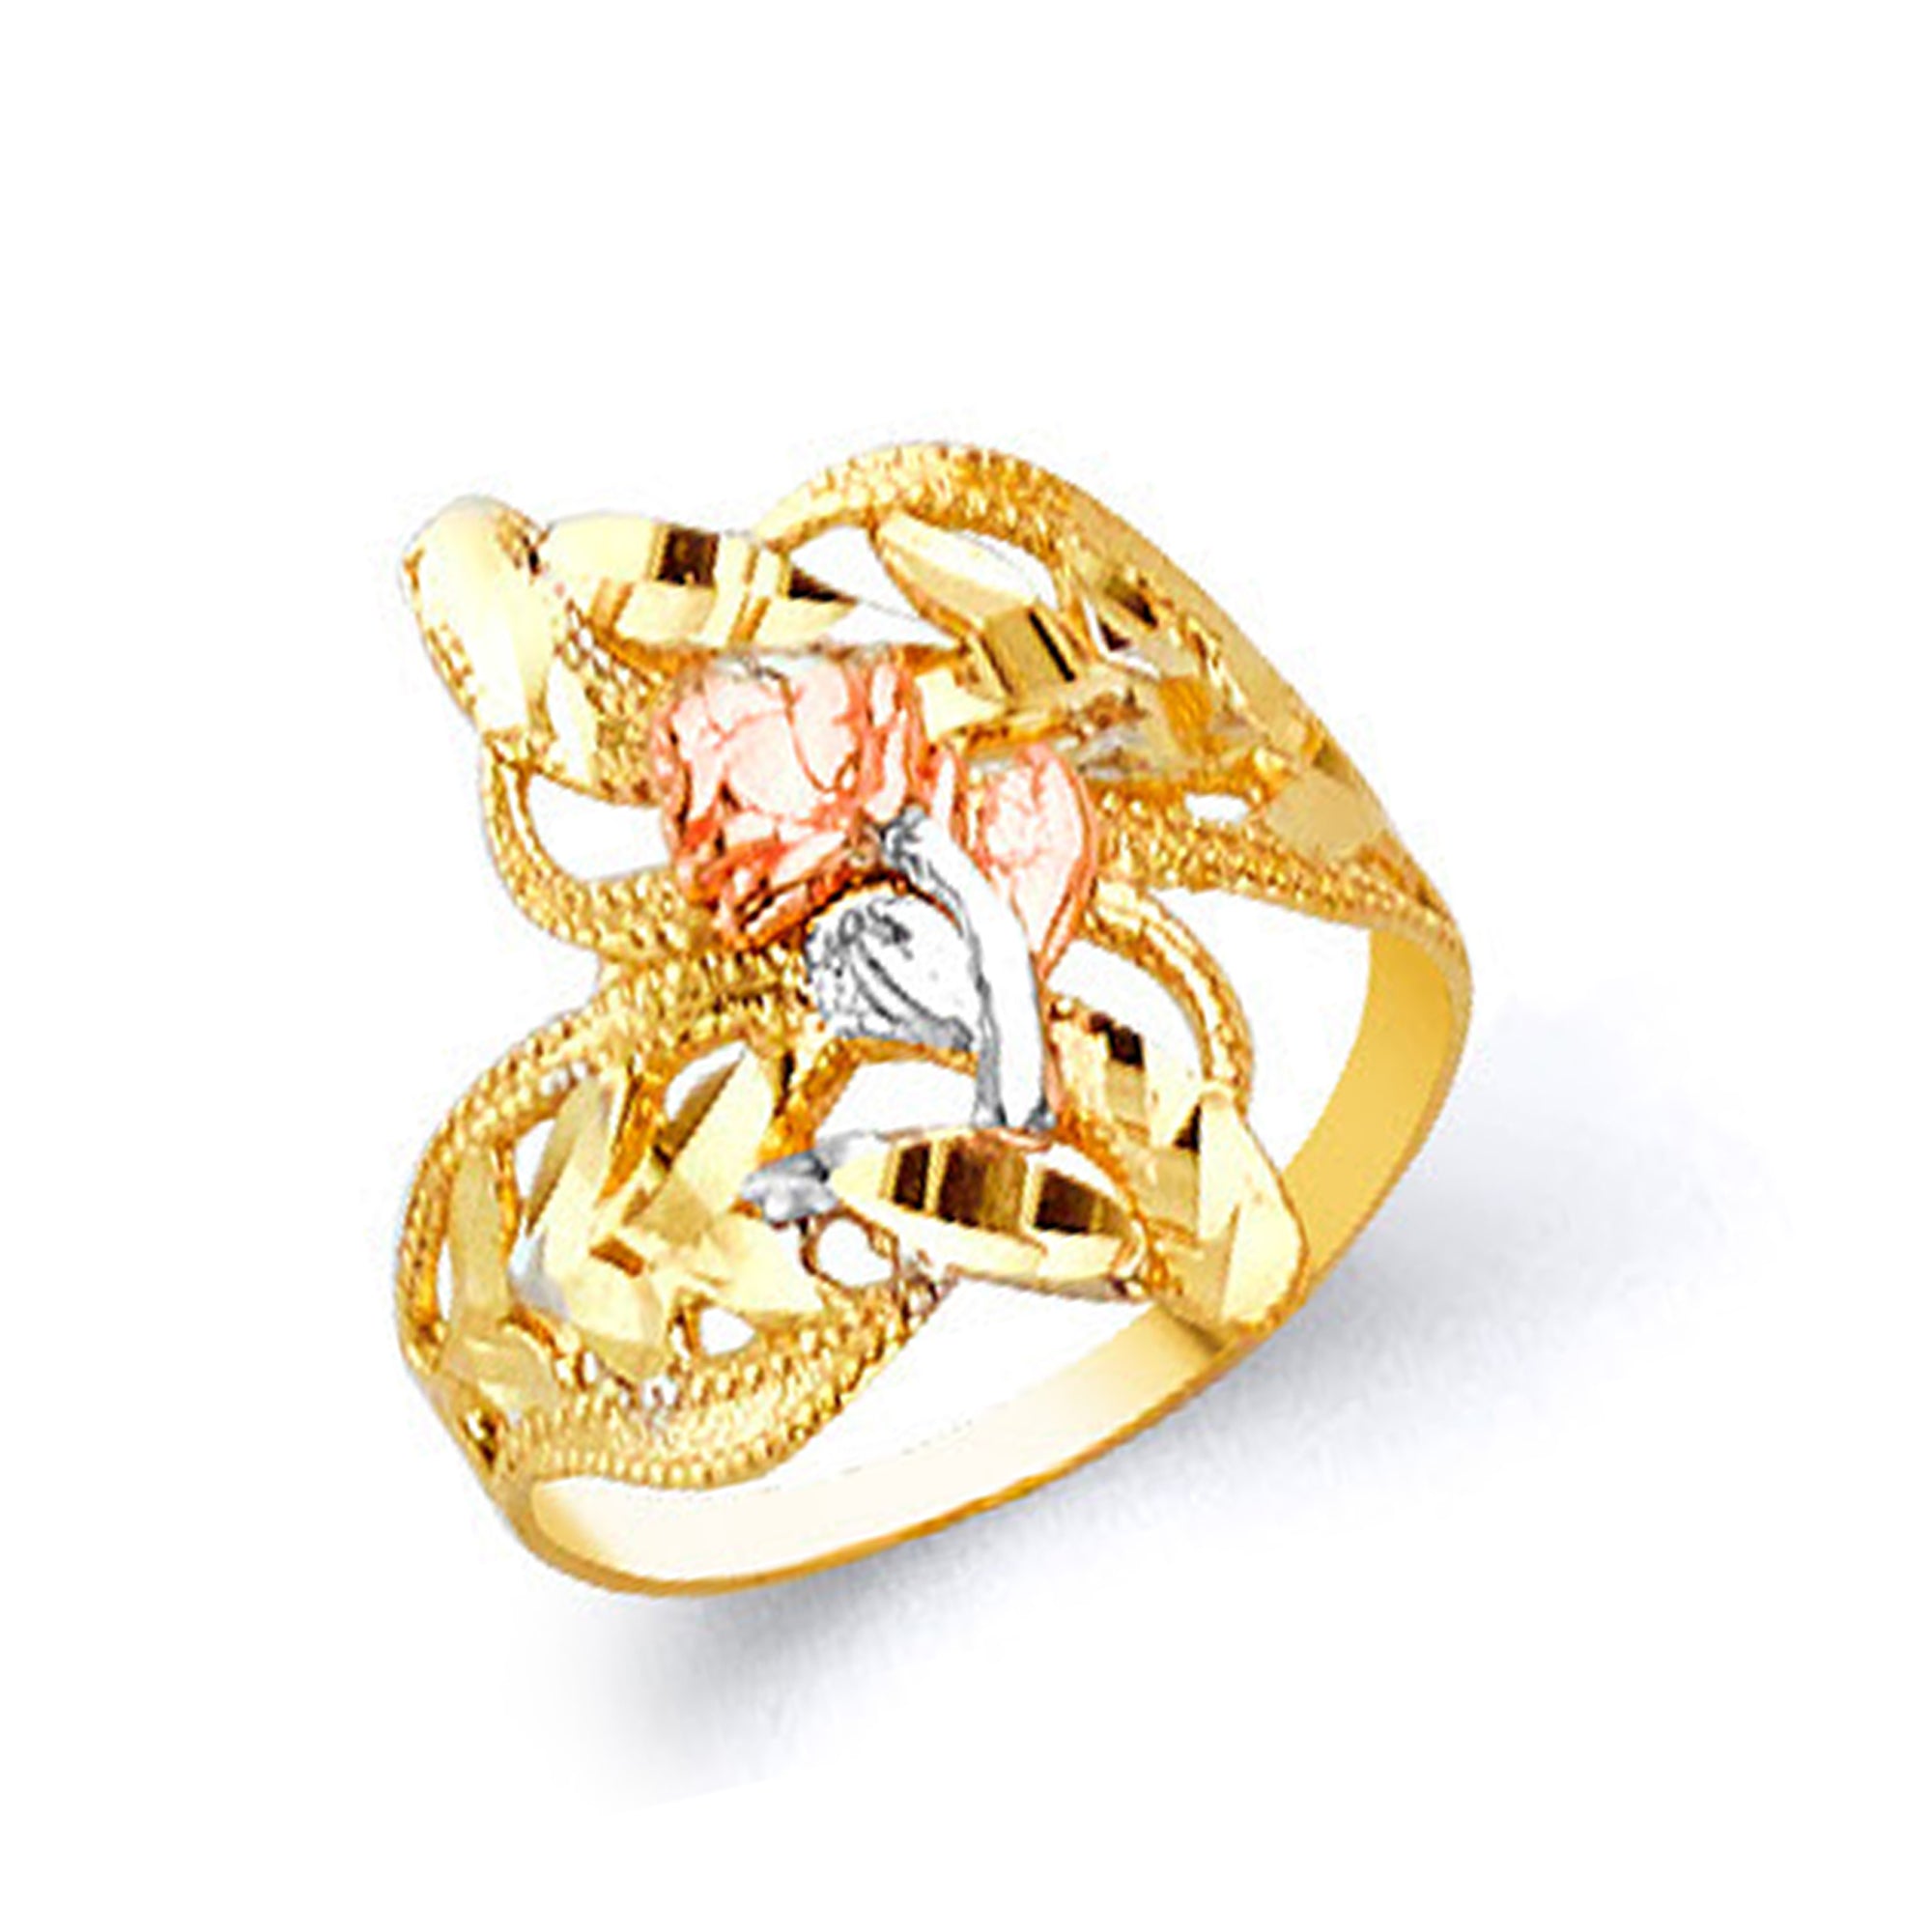 Fascinating Freeform Rose Motif Ring in Solid Gold 